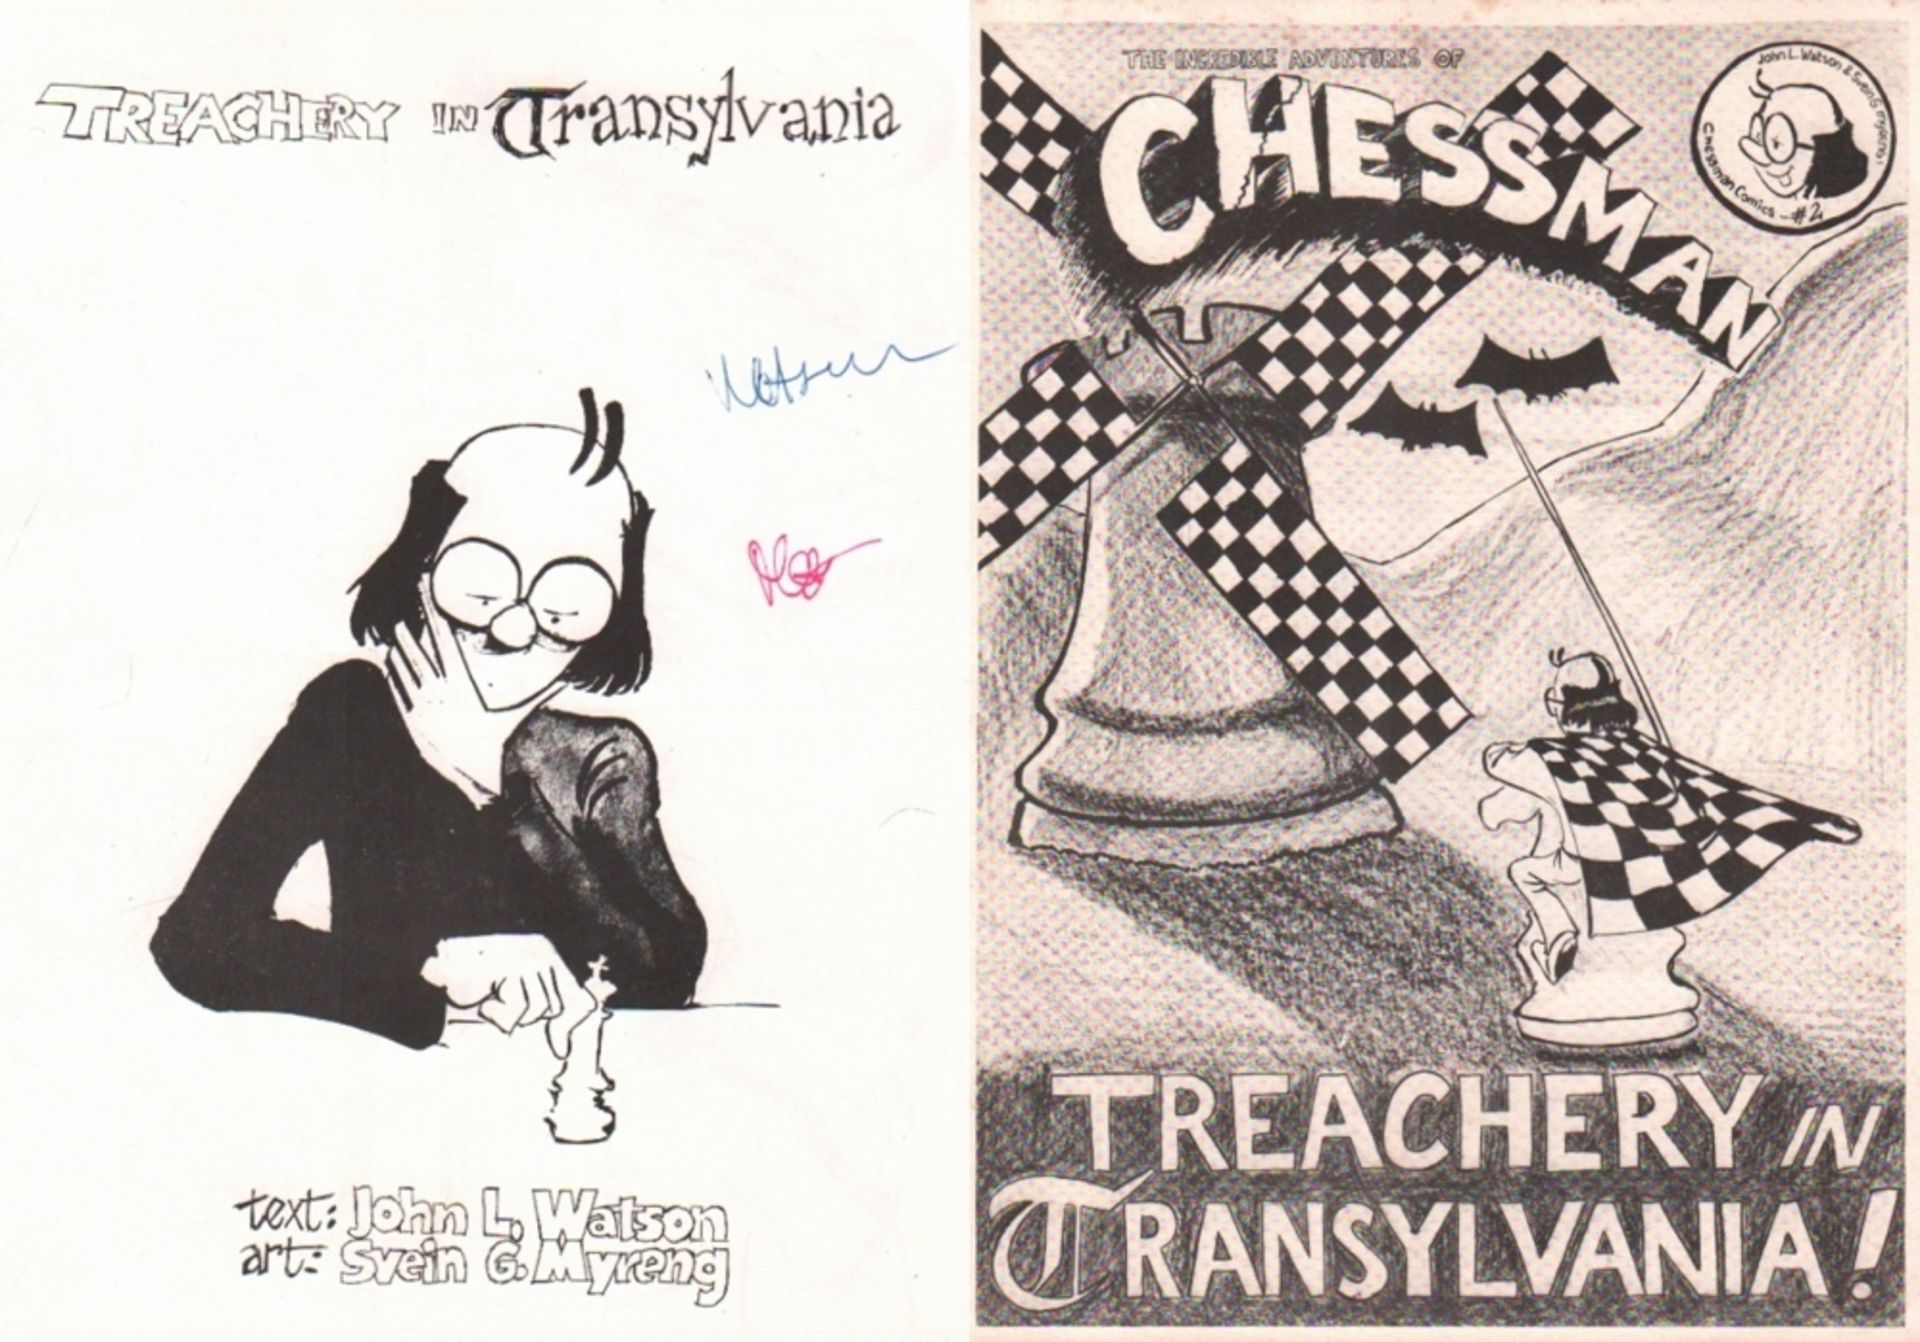 Comic. Watson, John und Svein G. Myreng. Treachery in Transylvania. Vorderumschlag: The incredible